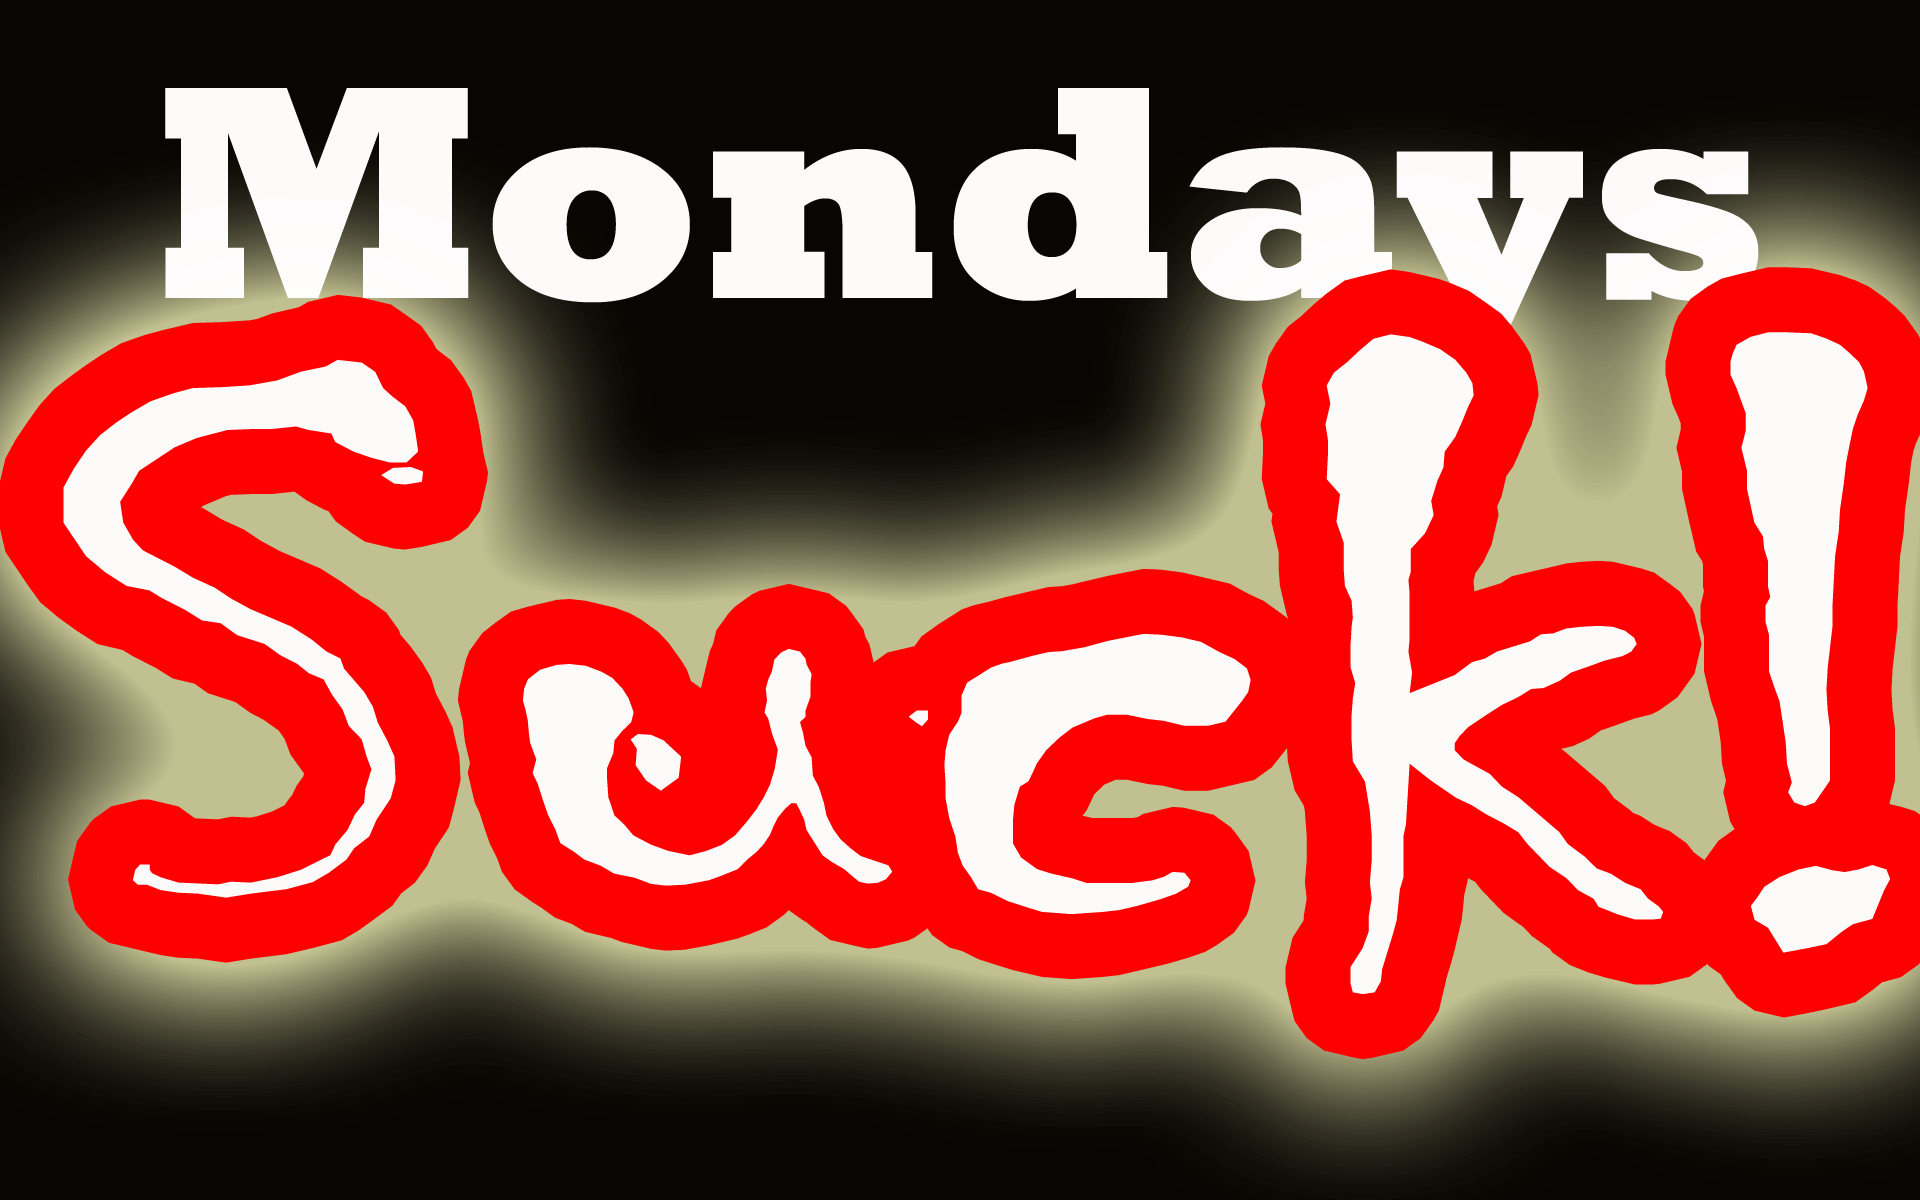 Mondays Suck Desktop Puter Wallpaper Background And Animated Meme